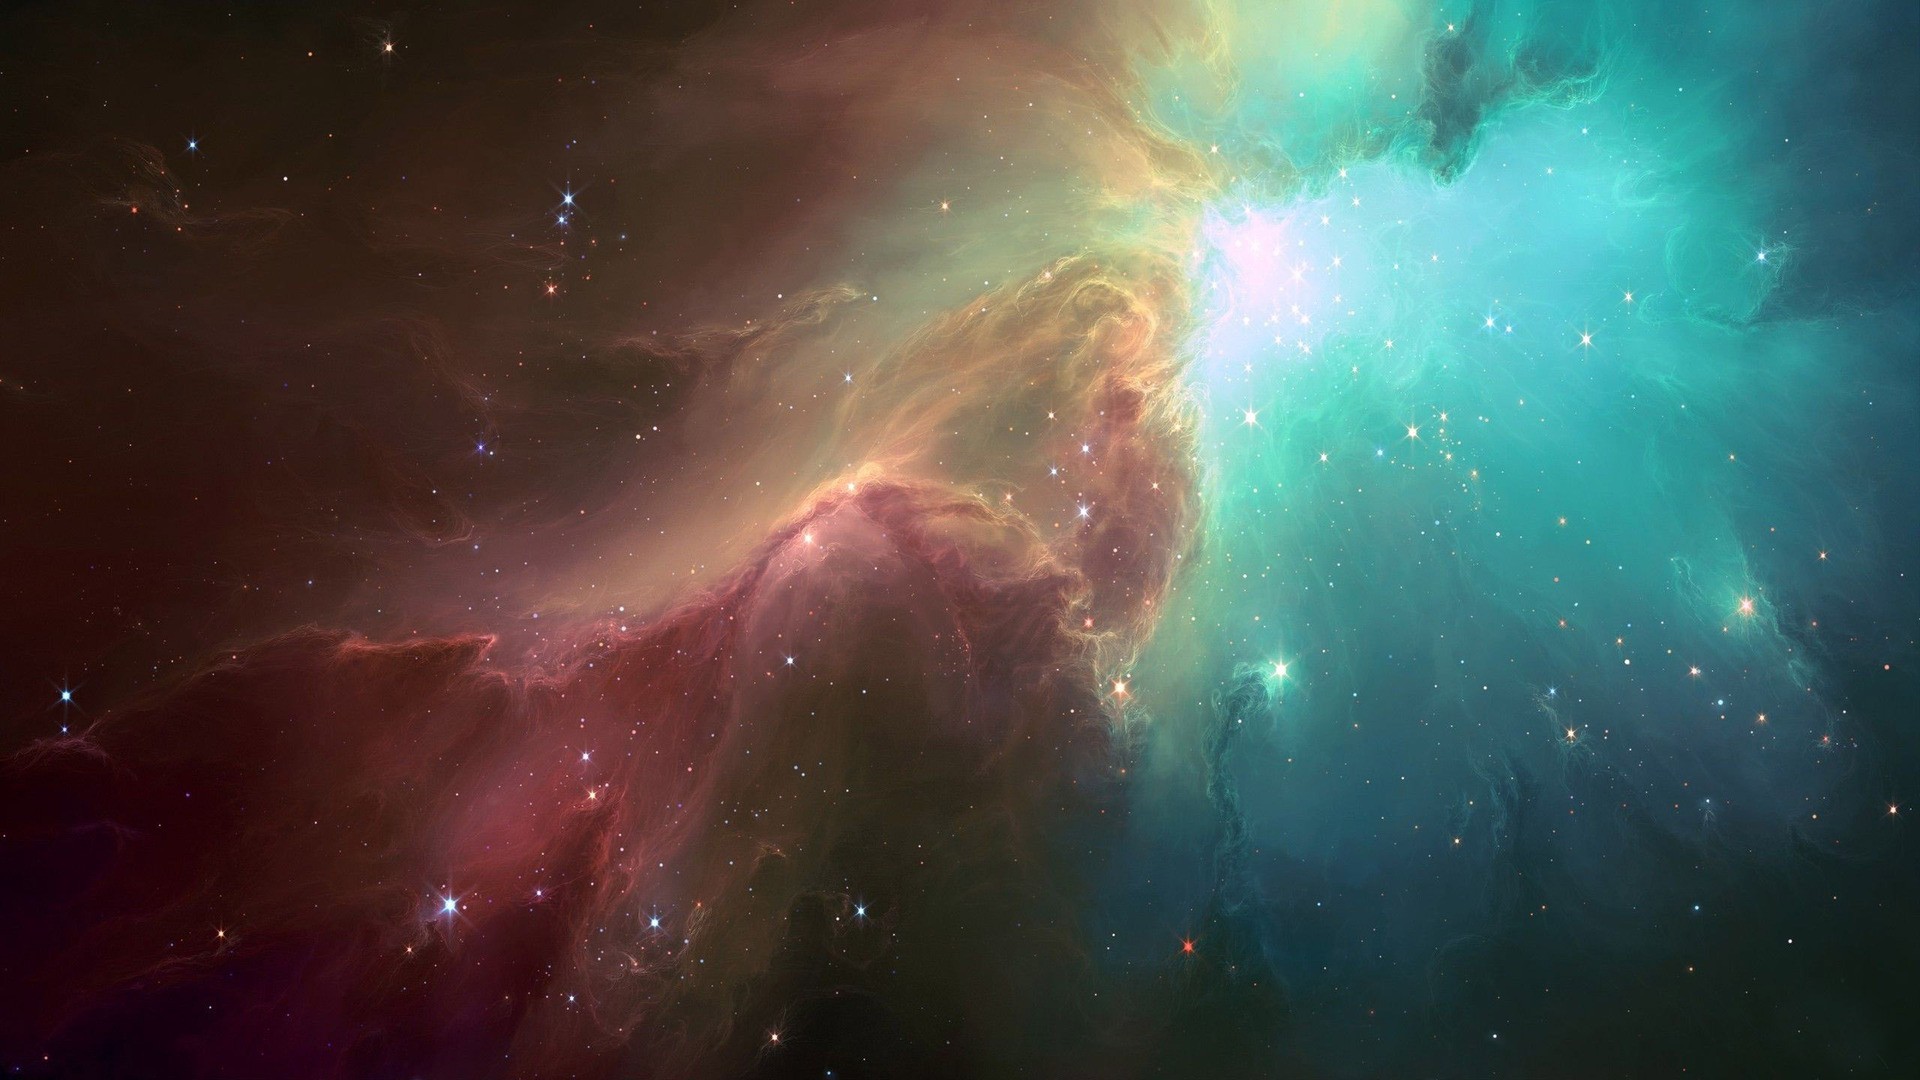  Nebula  wallpaper    Download free beautiful full HD  